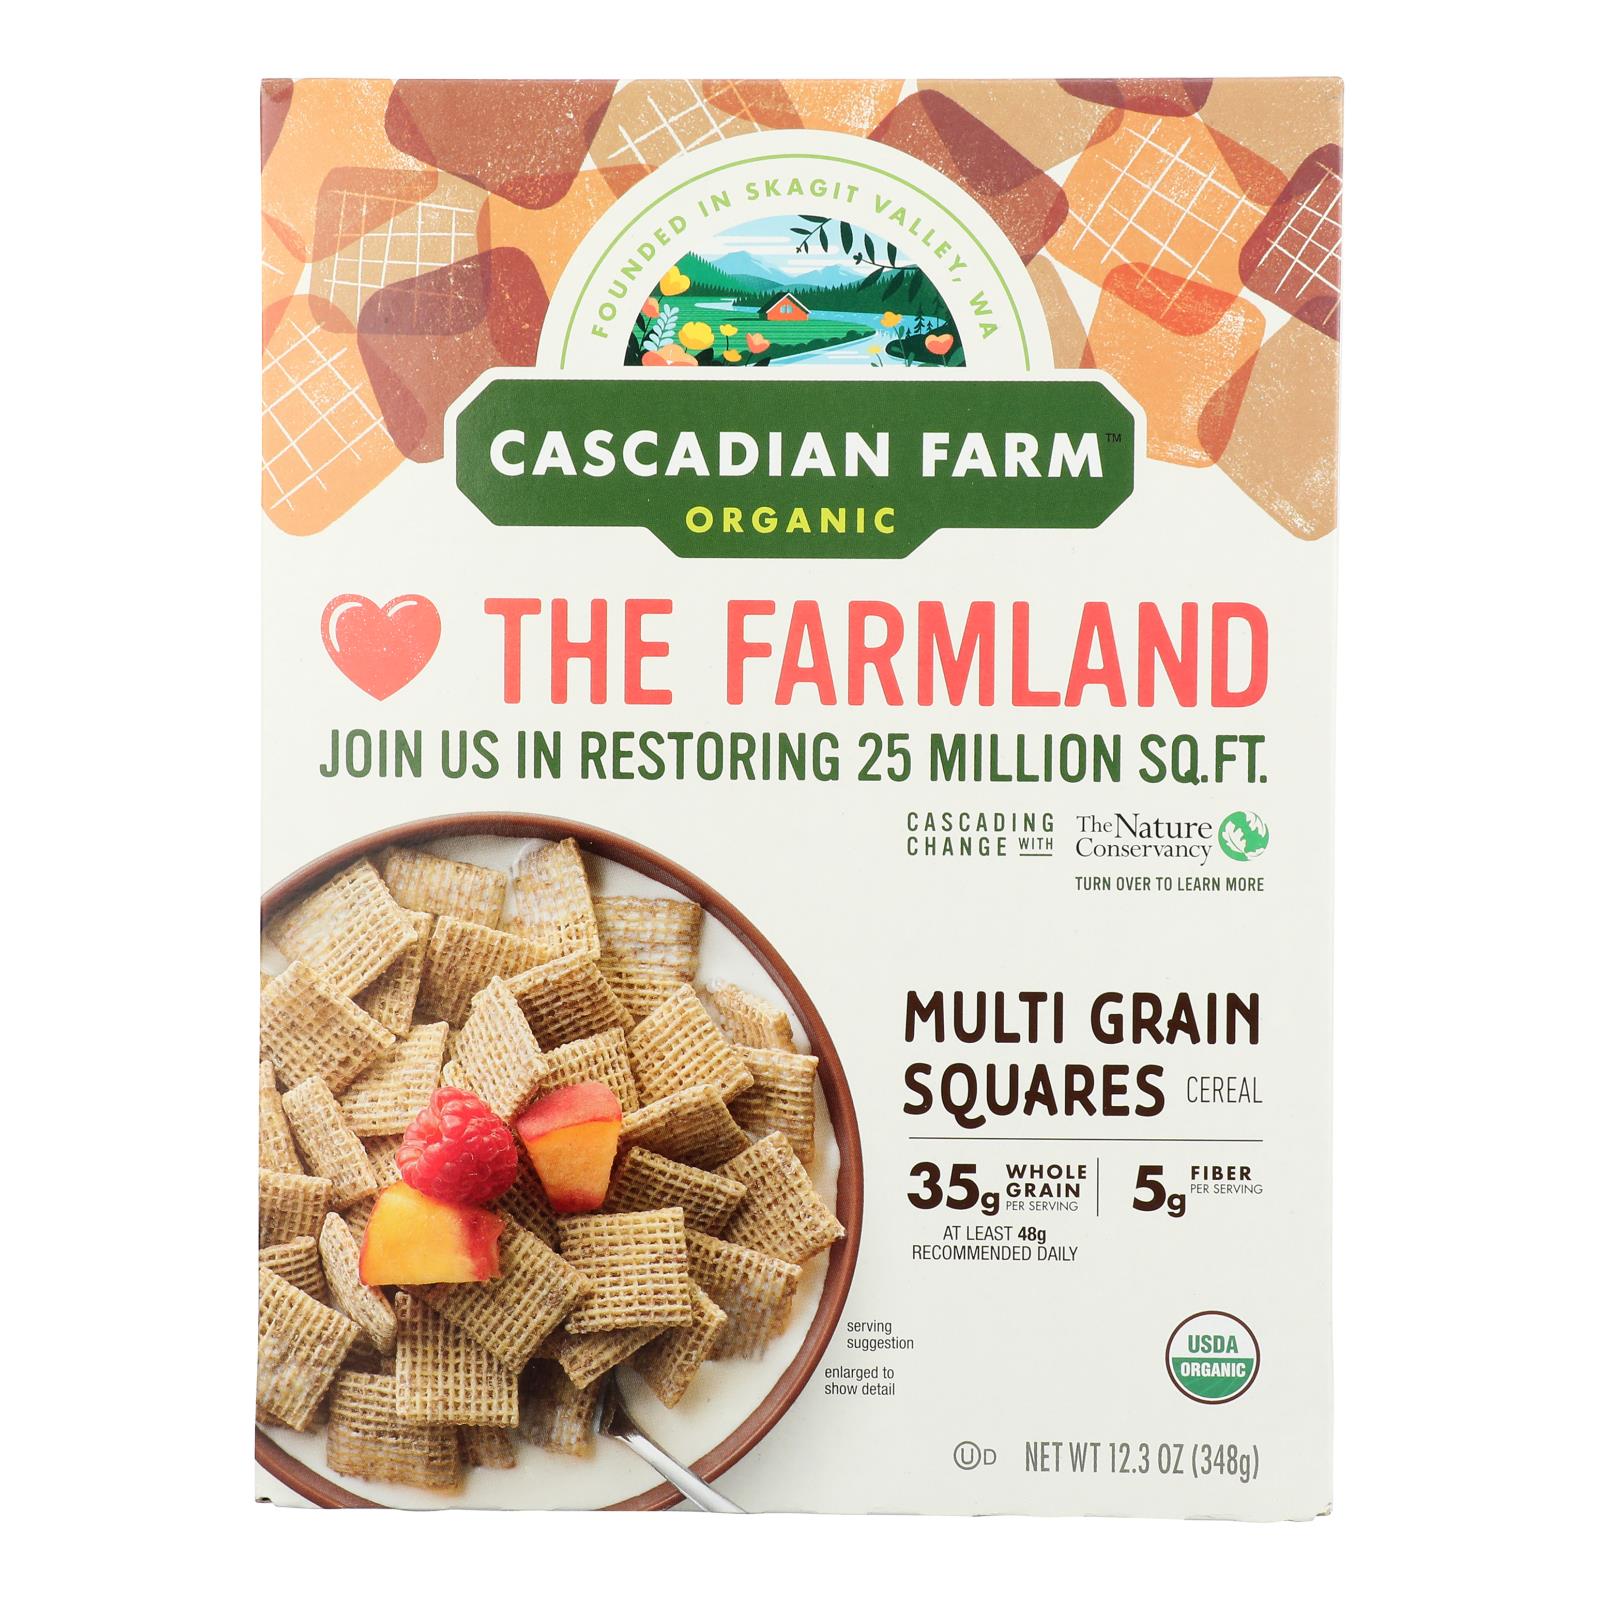 Cascadian Farm Cereal - Organic - Multi-grain Squares - 12.3 Oz - Case Of 10